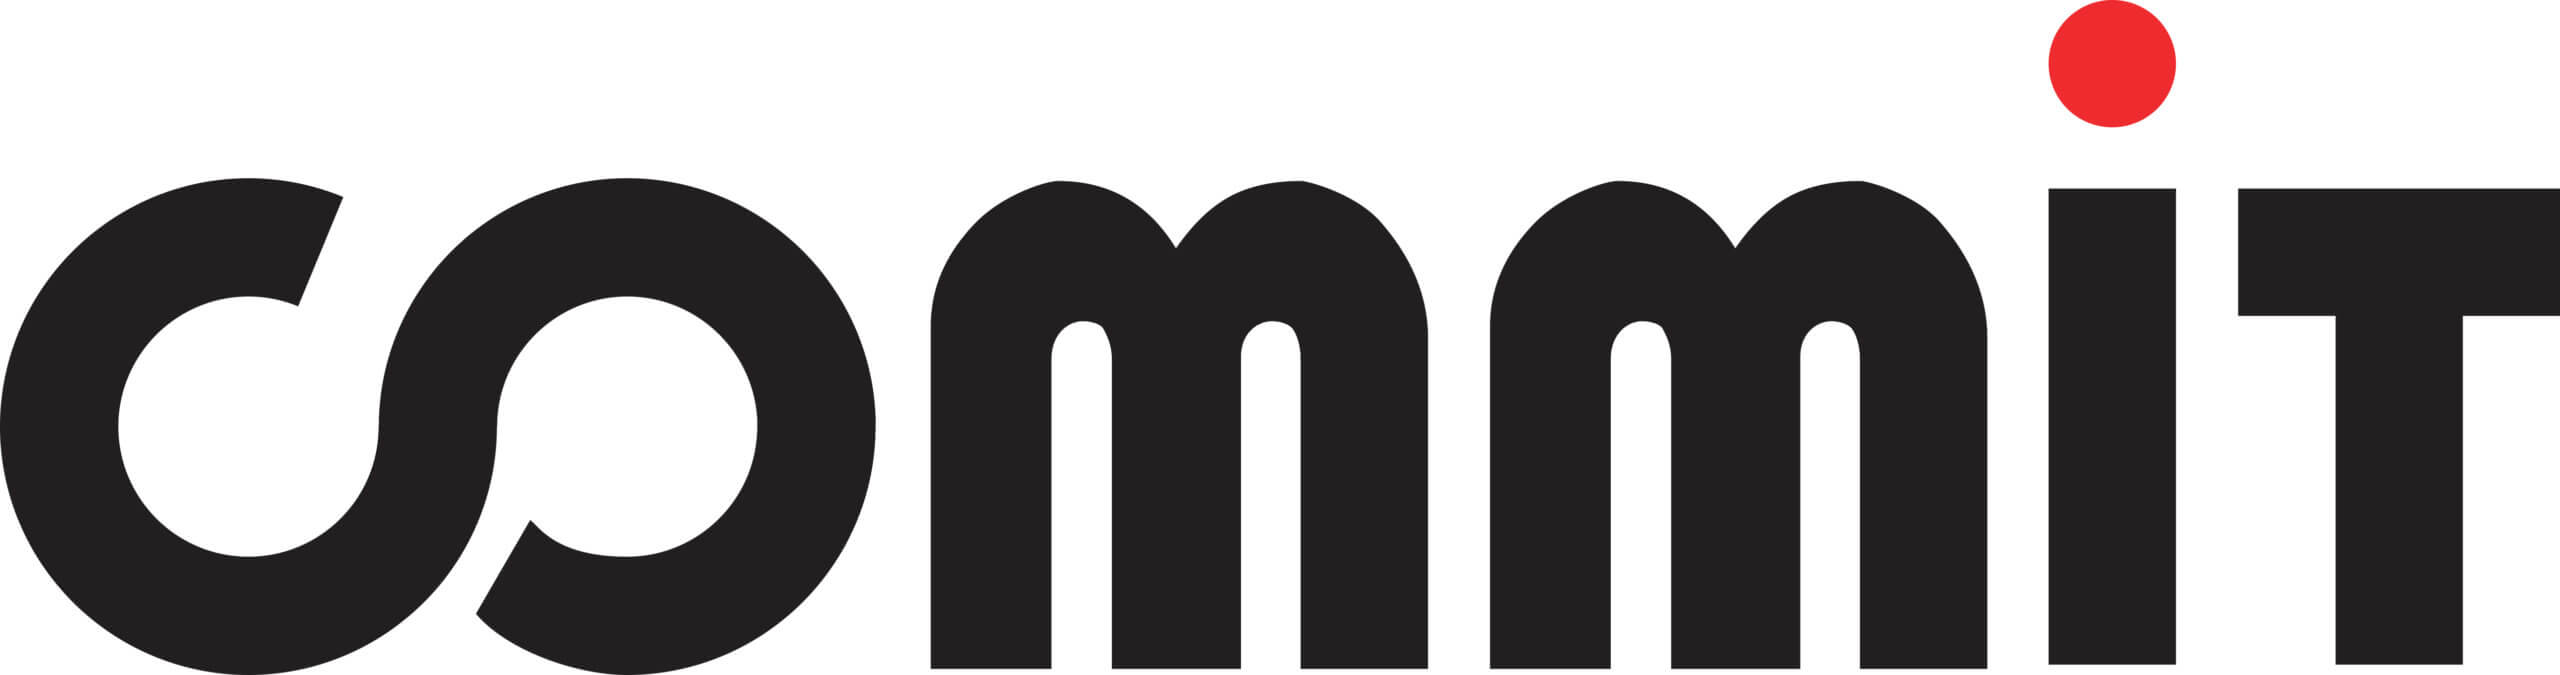 COMMIT Logo 1 scaled